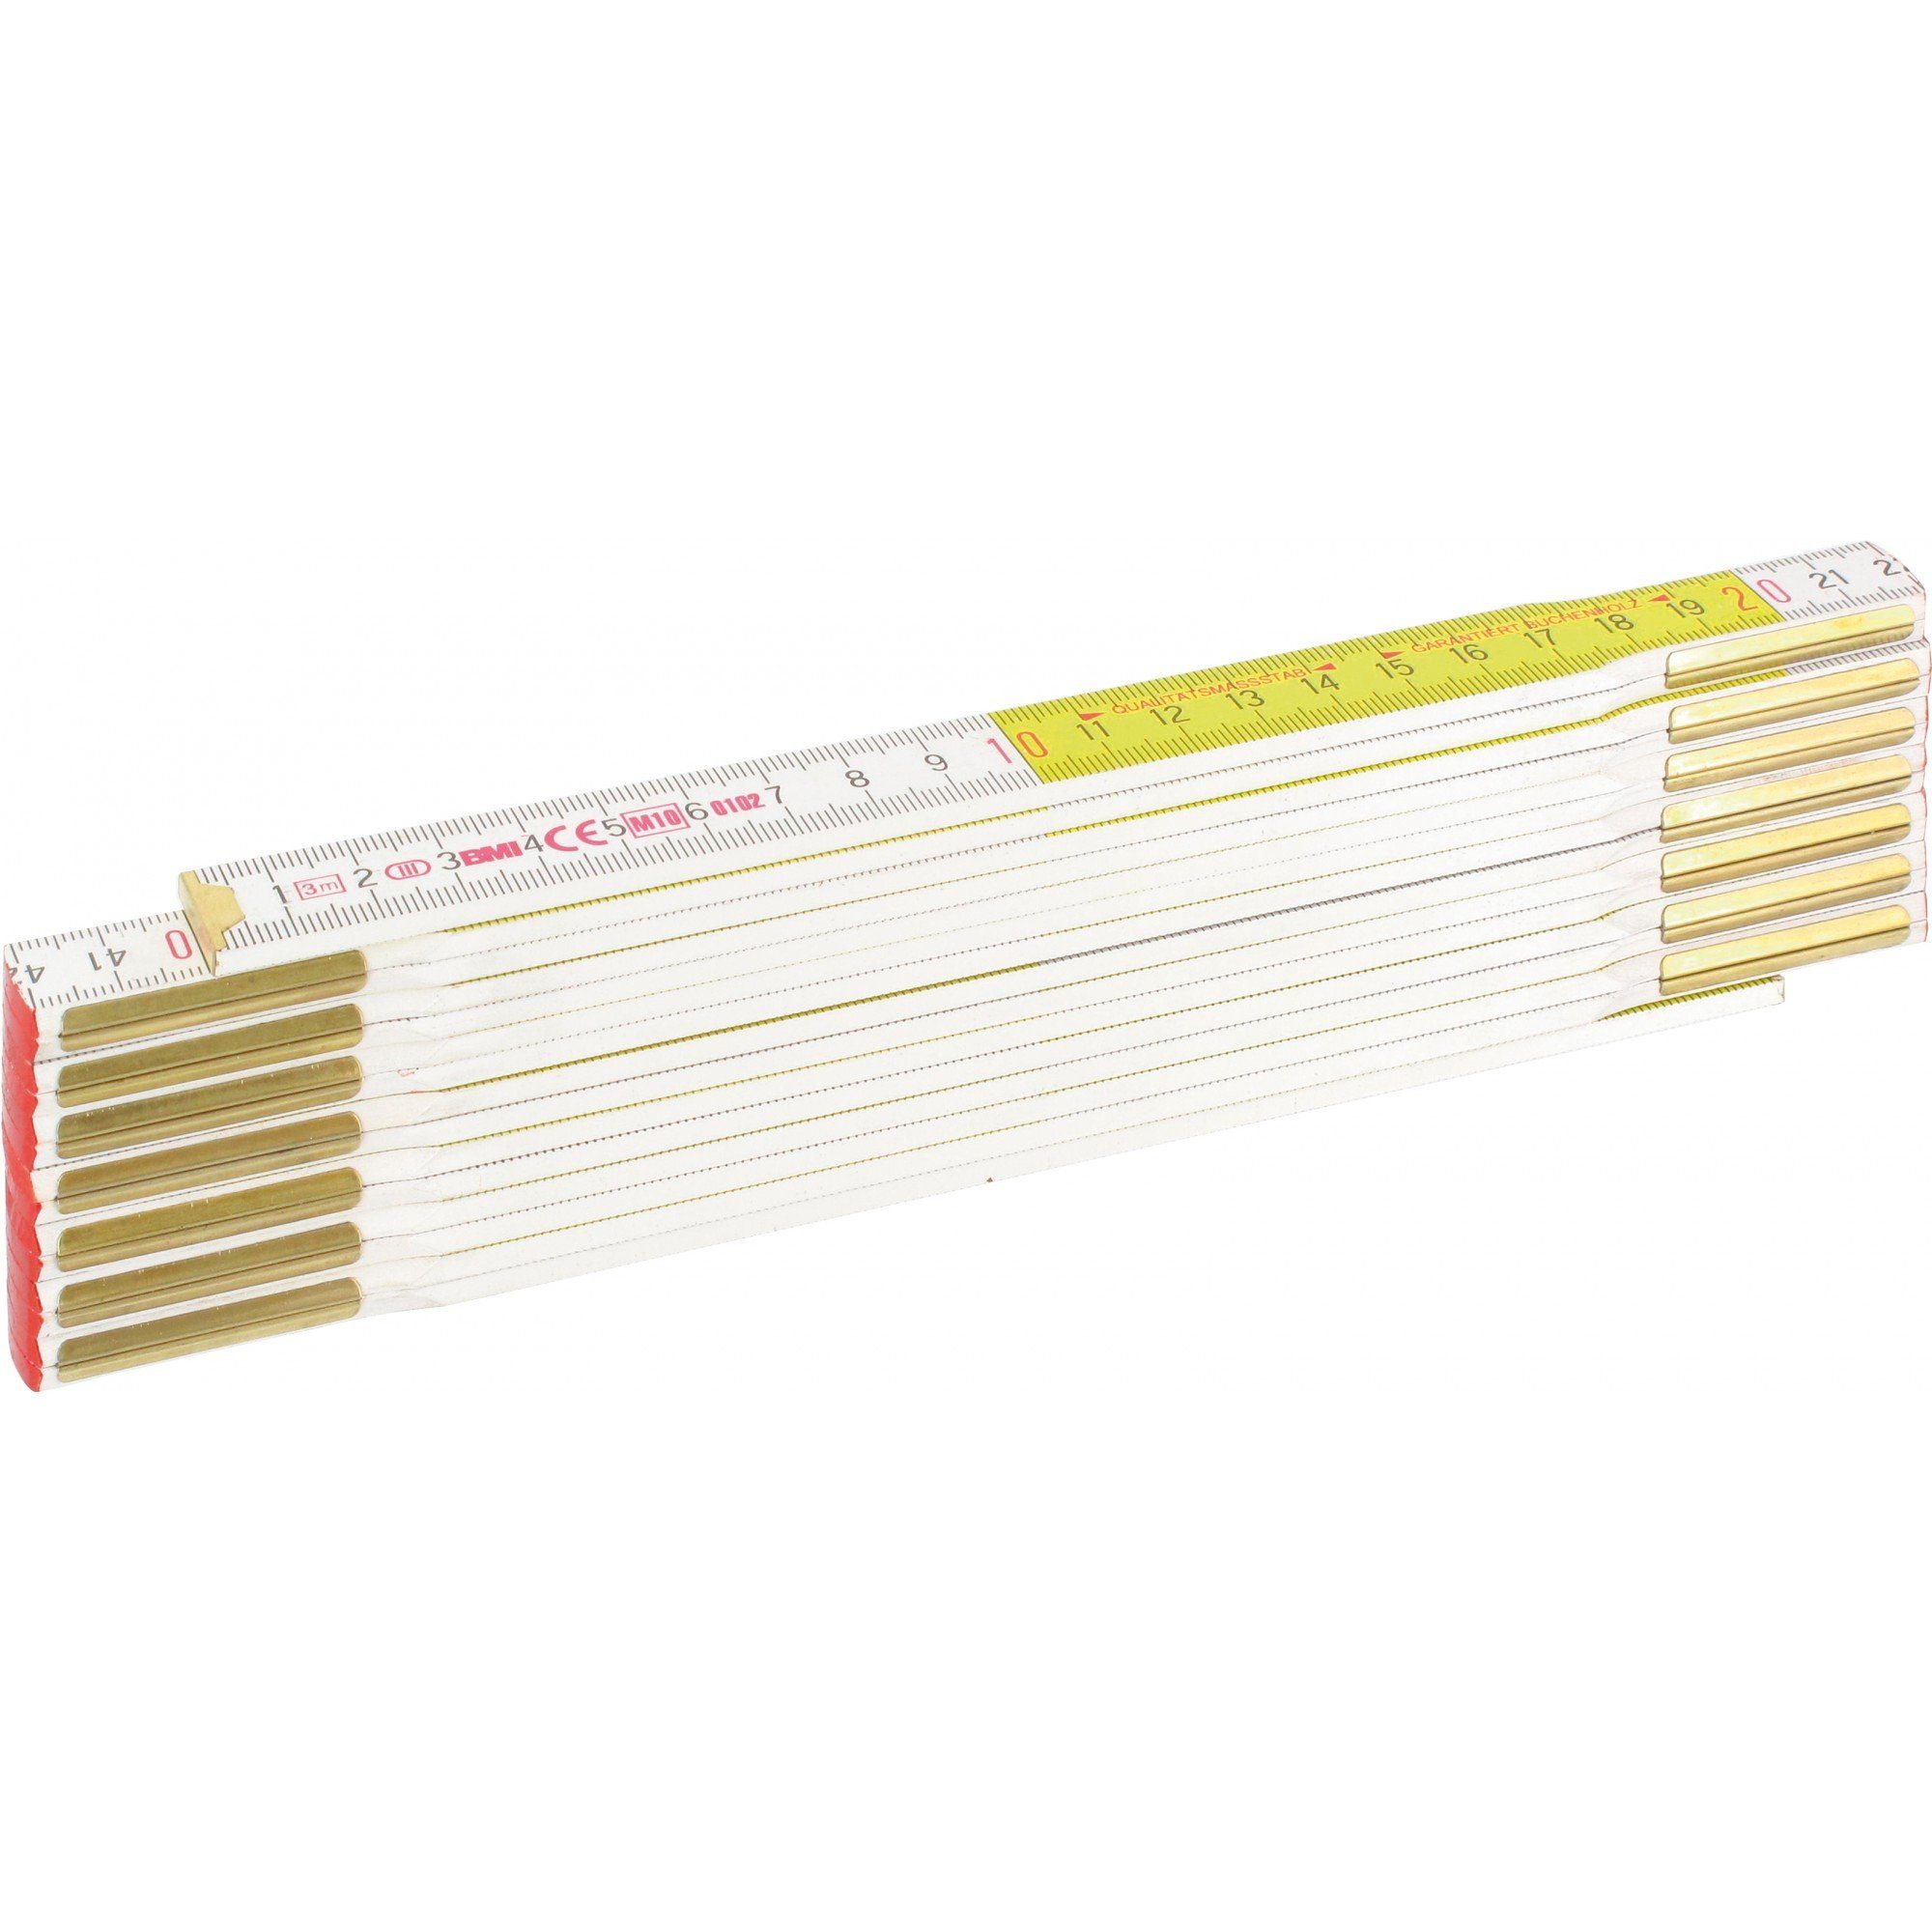 BMI Zollstock Holz Gliedermaßstab Schmiege 3m gelb-weiß, EG-Genauigkeitsklasse: III